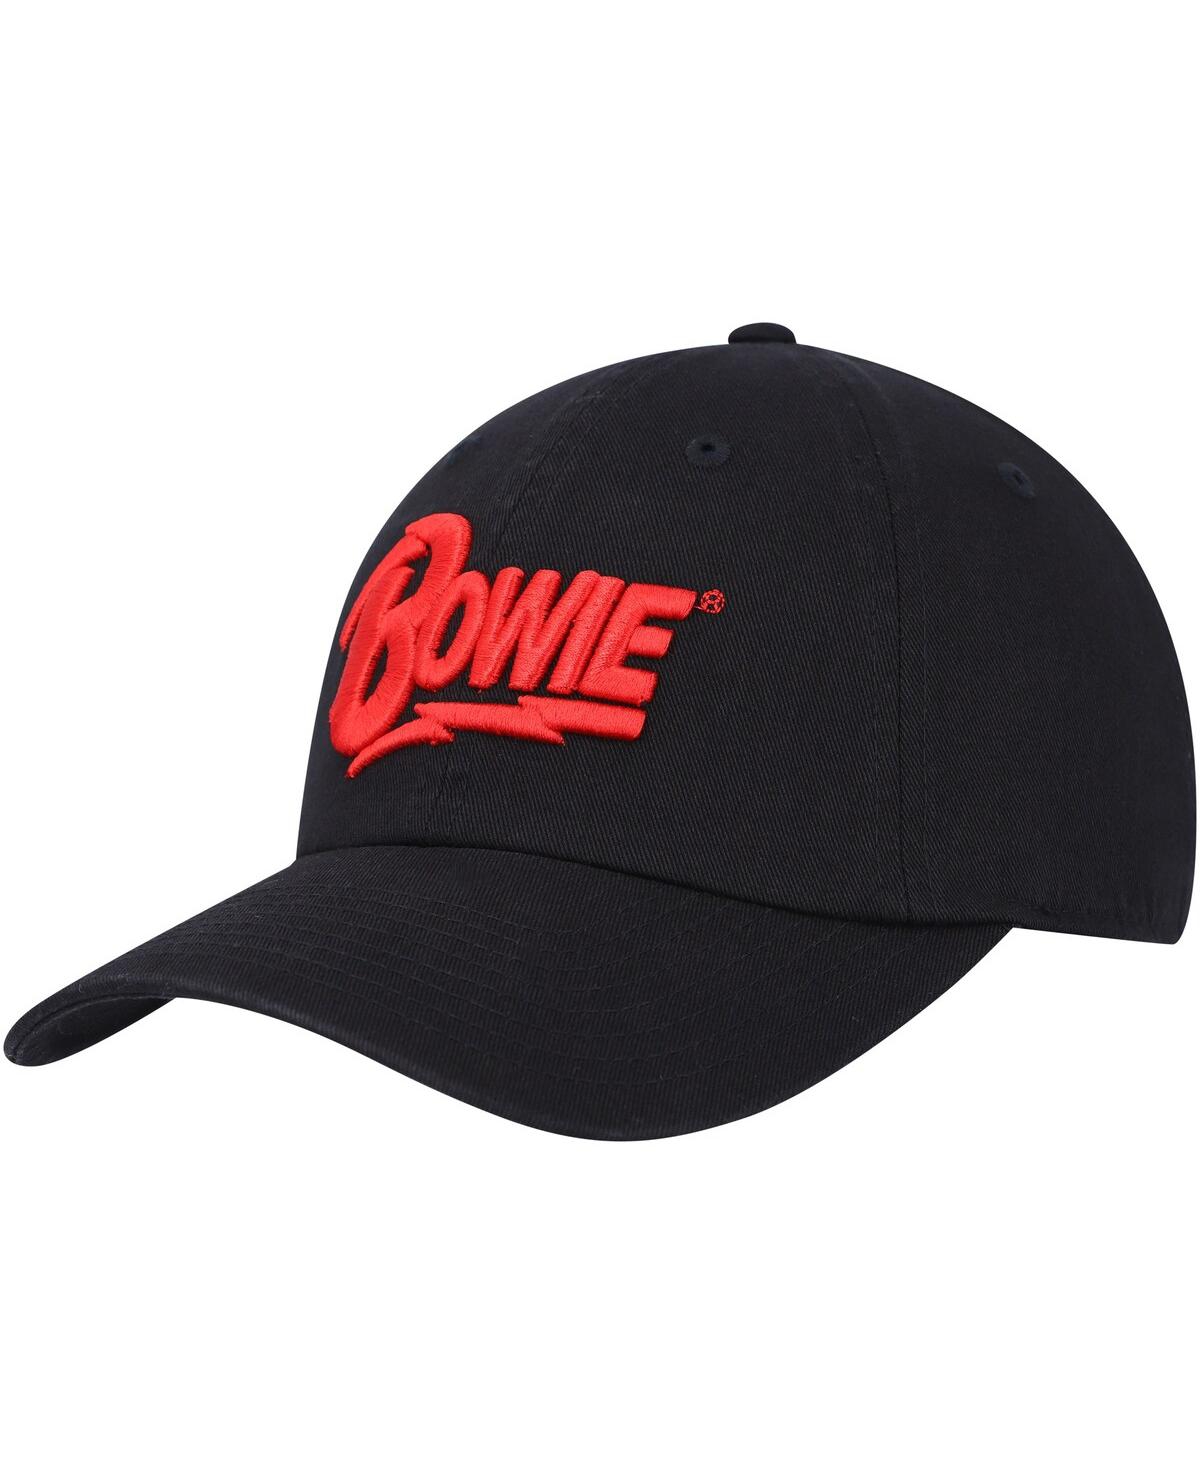 American Needle Men's  Black David Bowie Ballpark Adjustable Hat